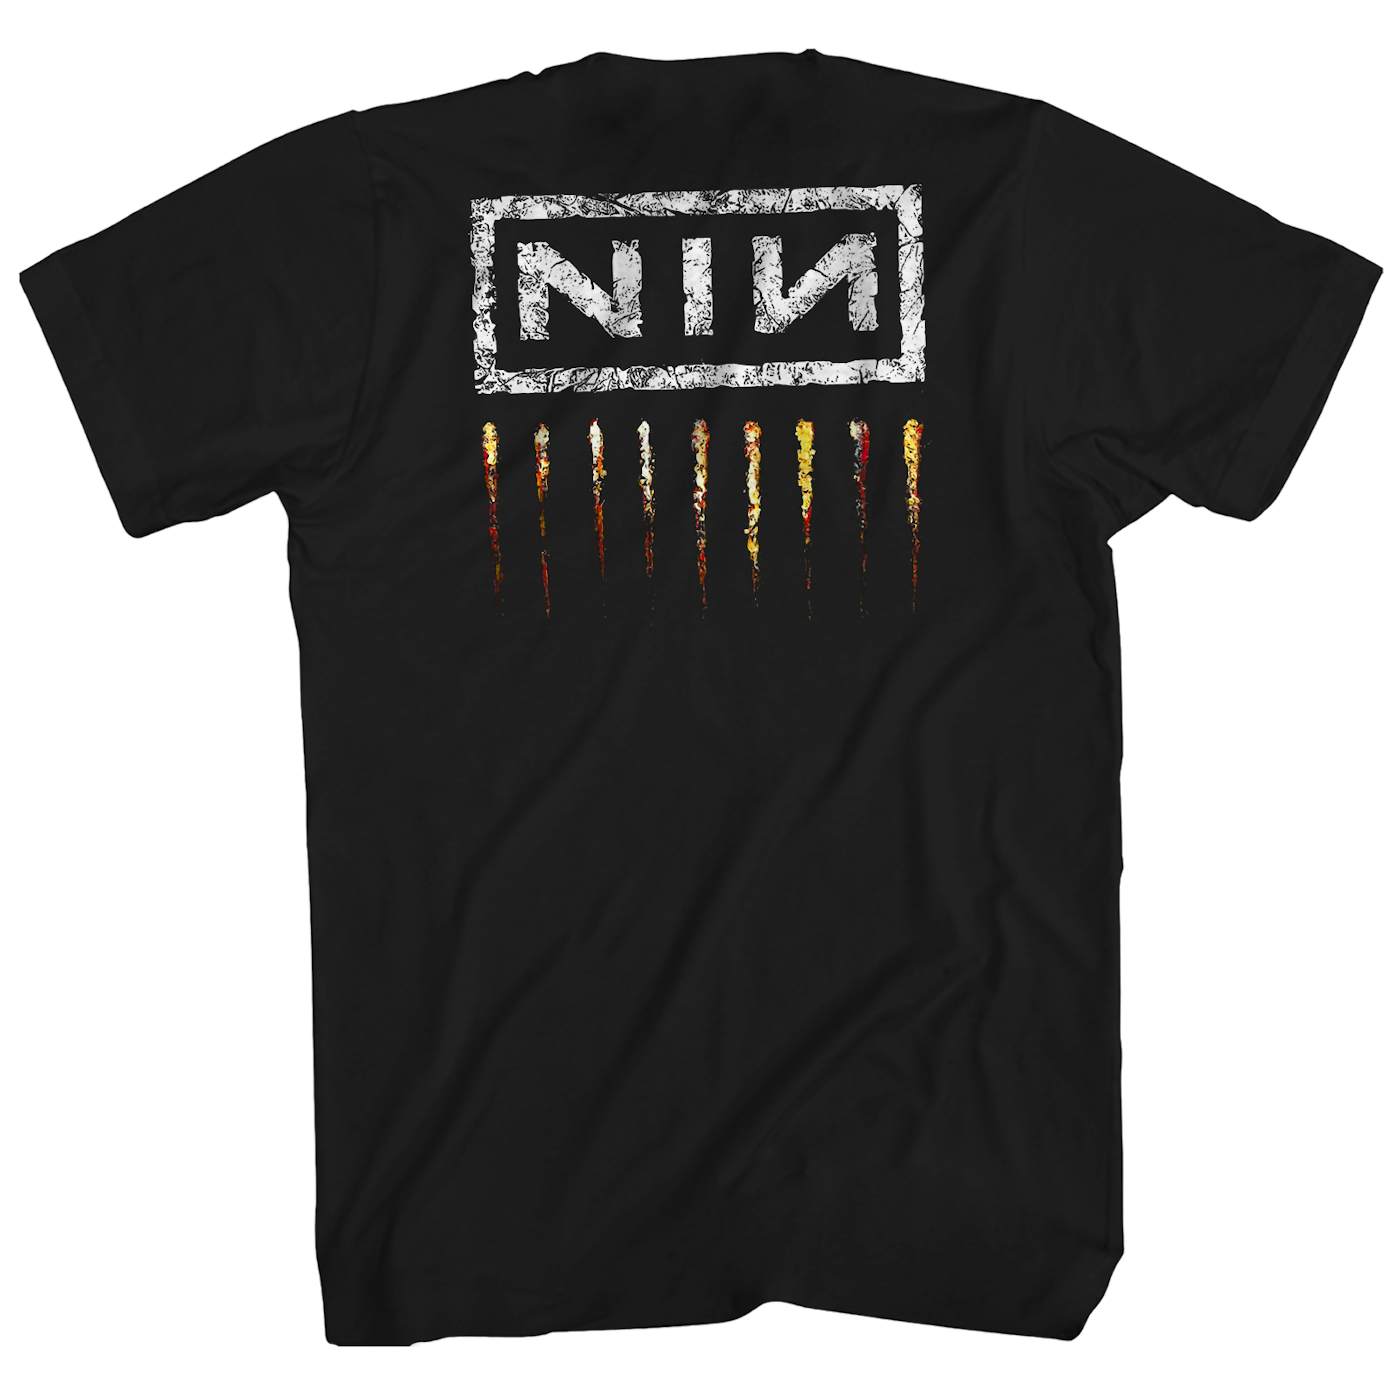 Nine Inch Nails T-Shirt | The Downward Spiral Nine Inch Nails Shirt